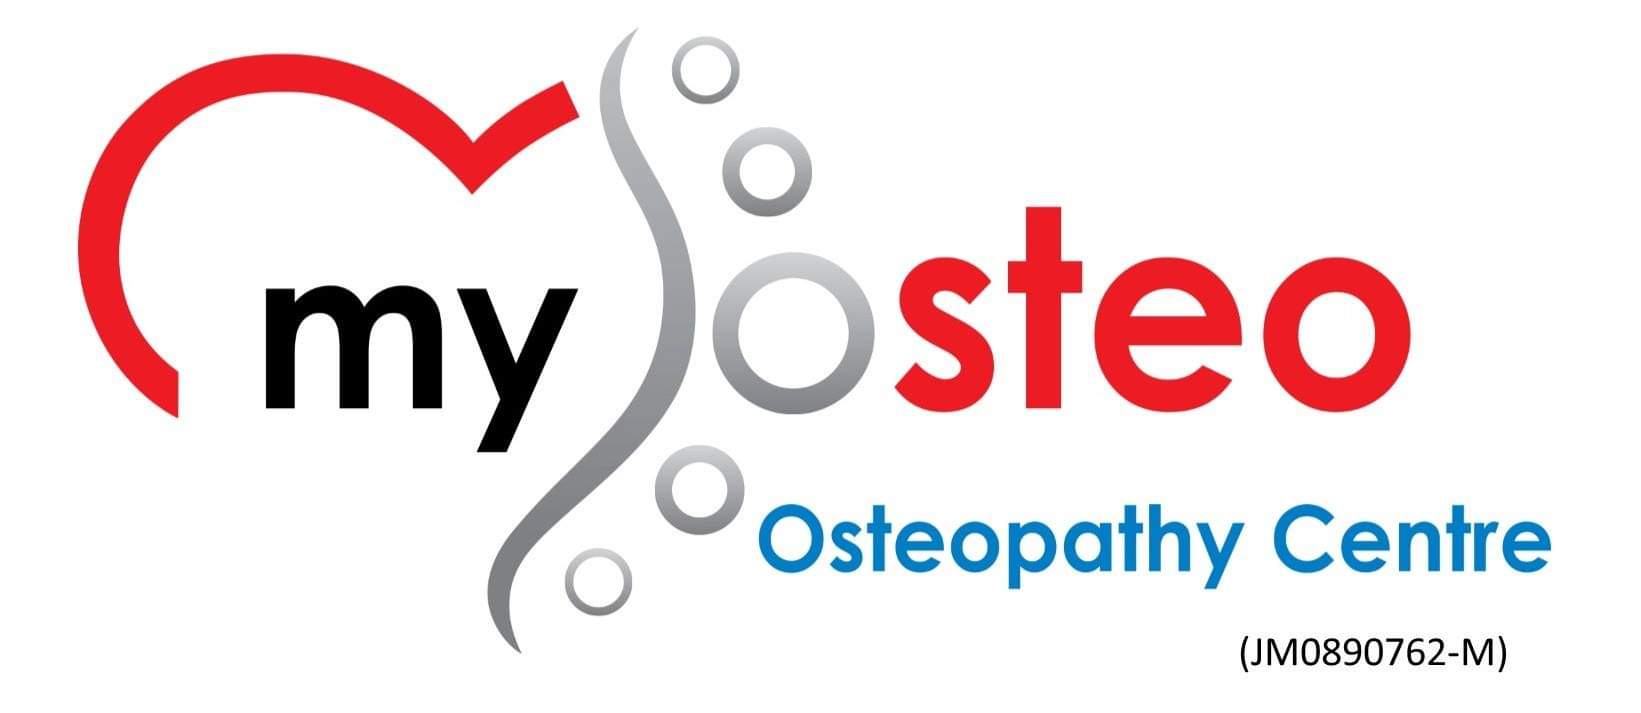 My Osteo Osteopathy Centre